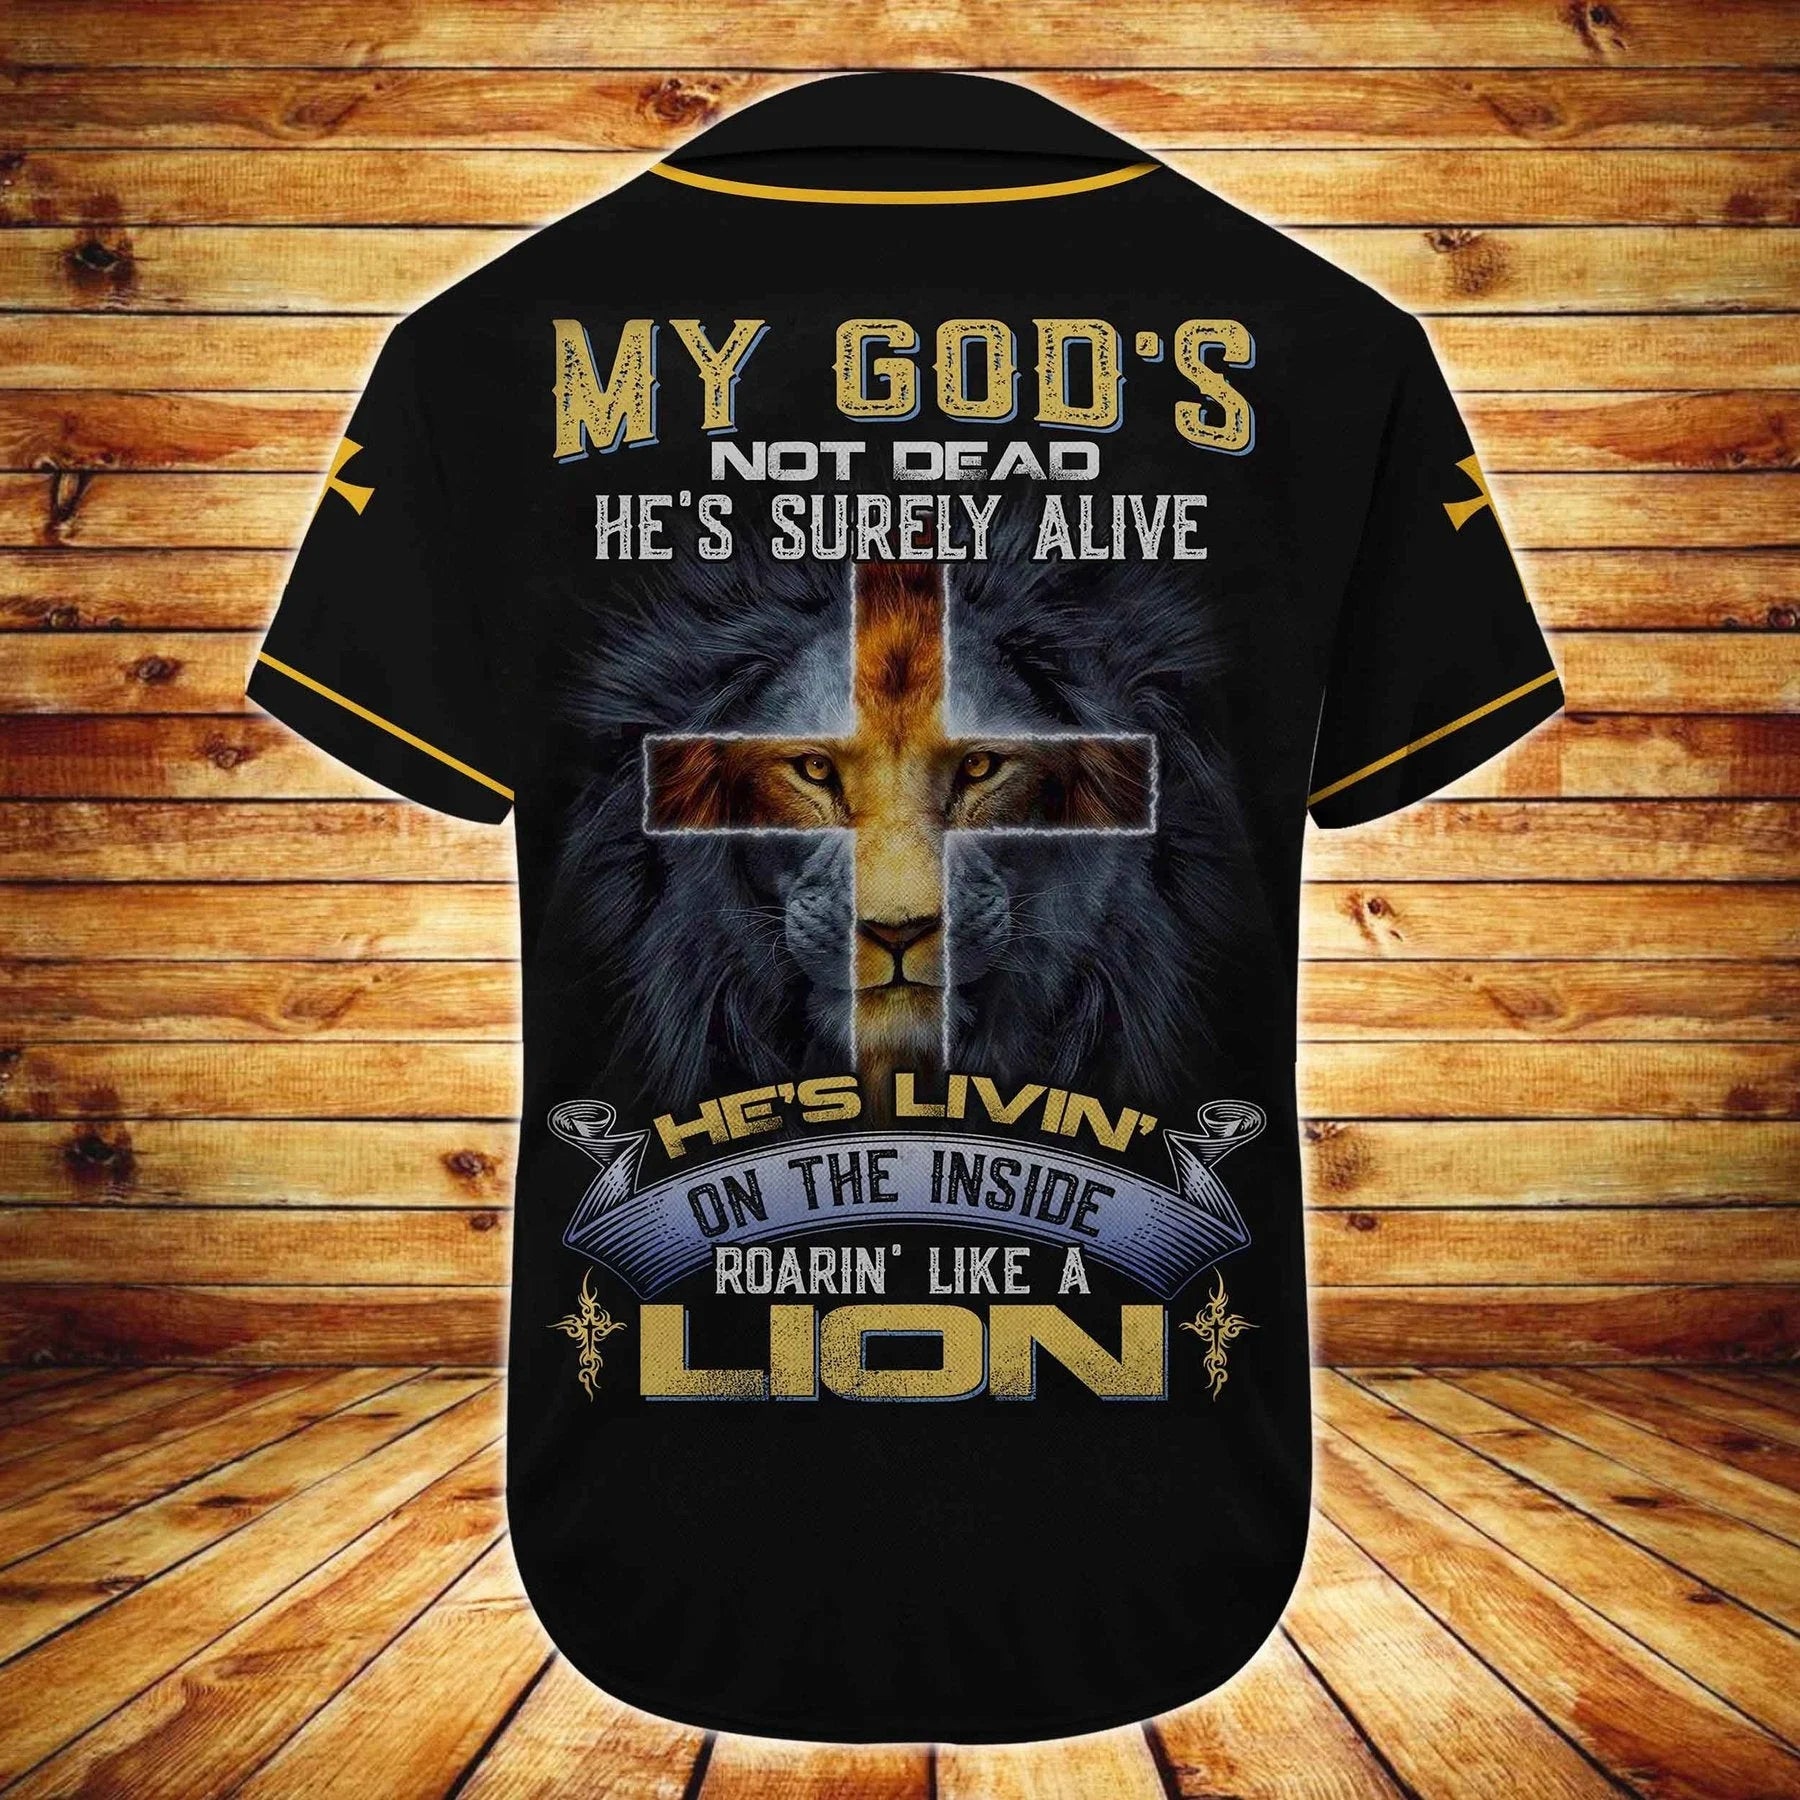 Cross, Lion Baseball Jersey - My God's not dead Custom Baseball Jersey Shirt For Men Women